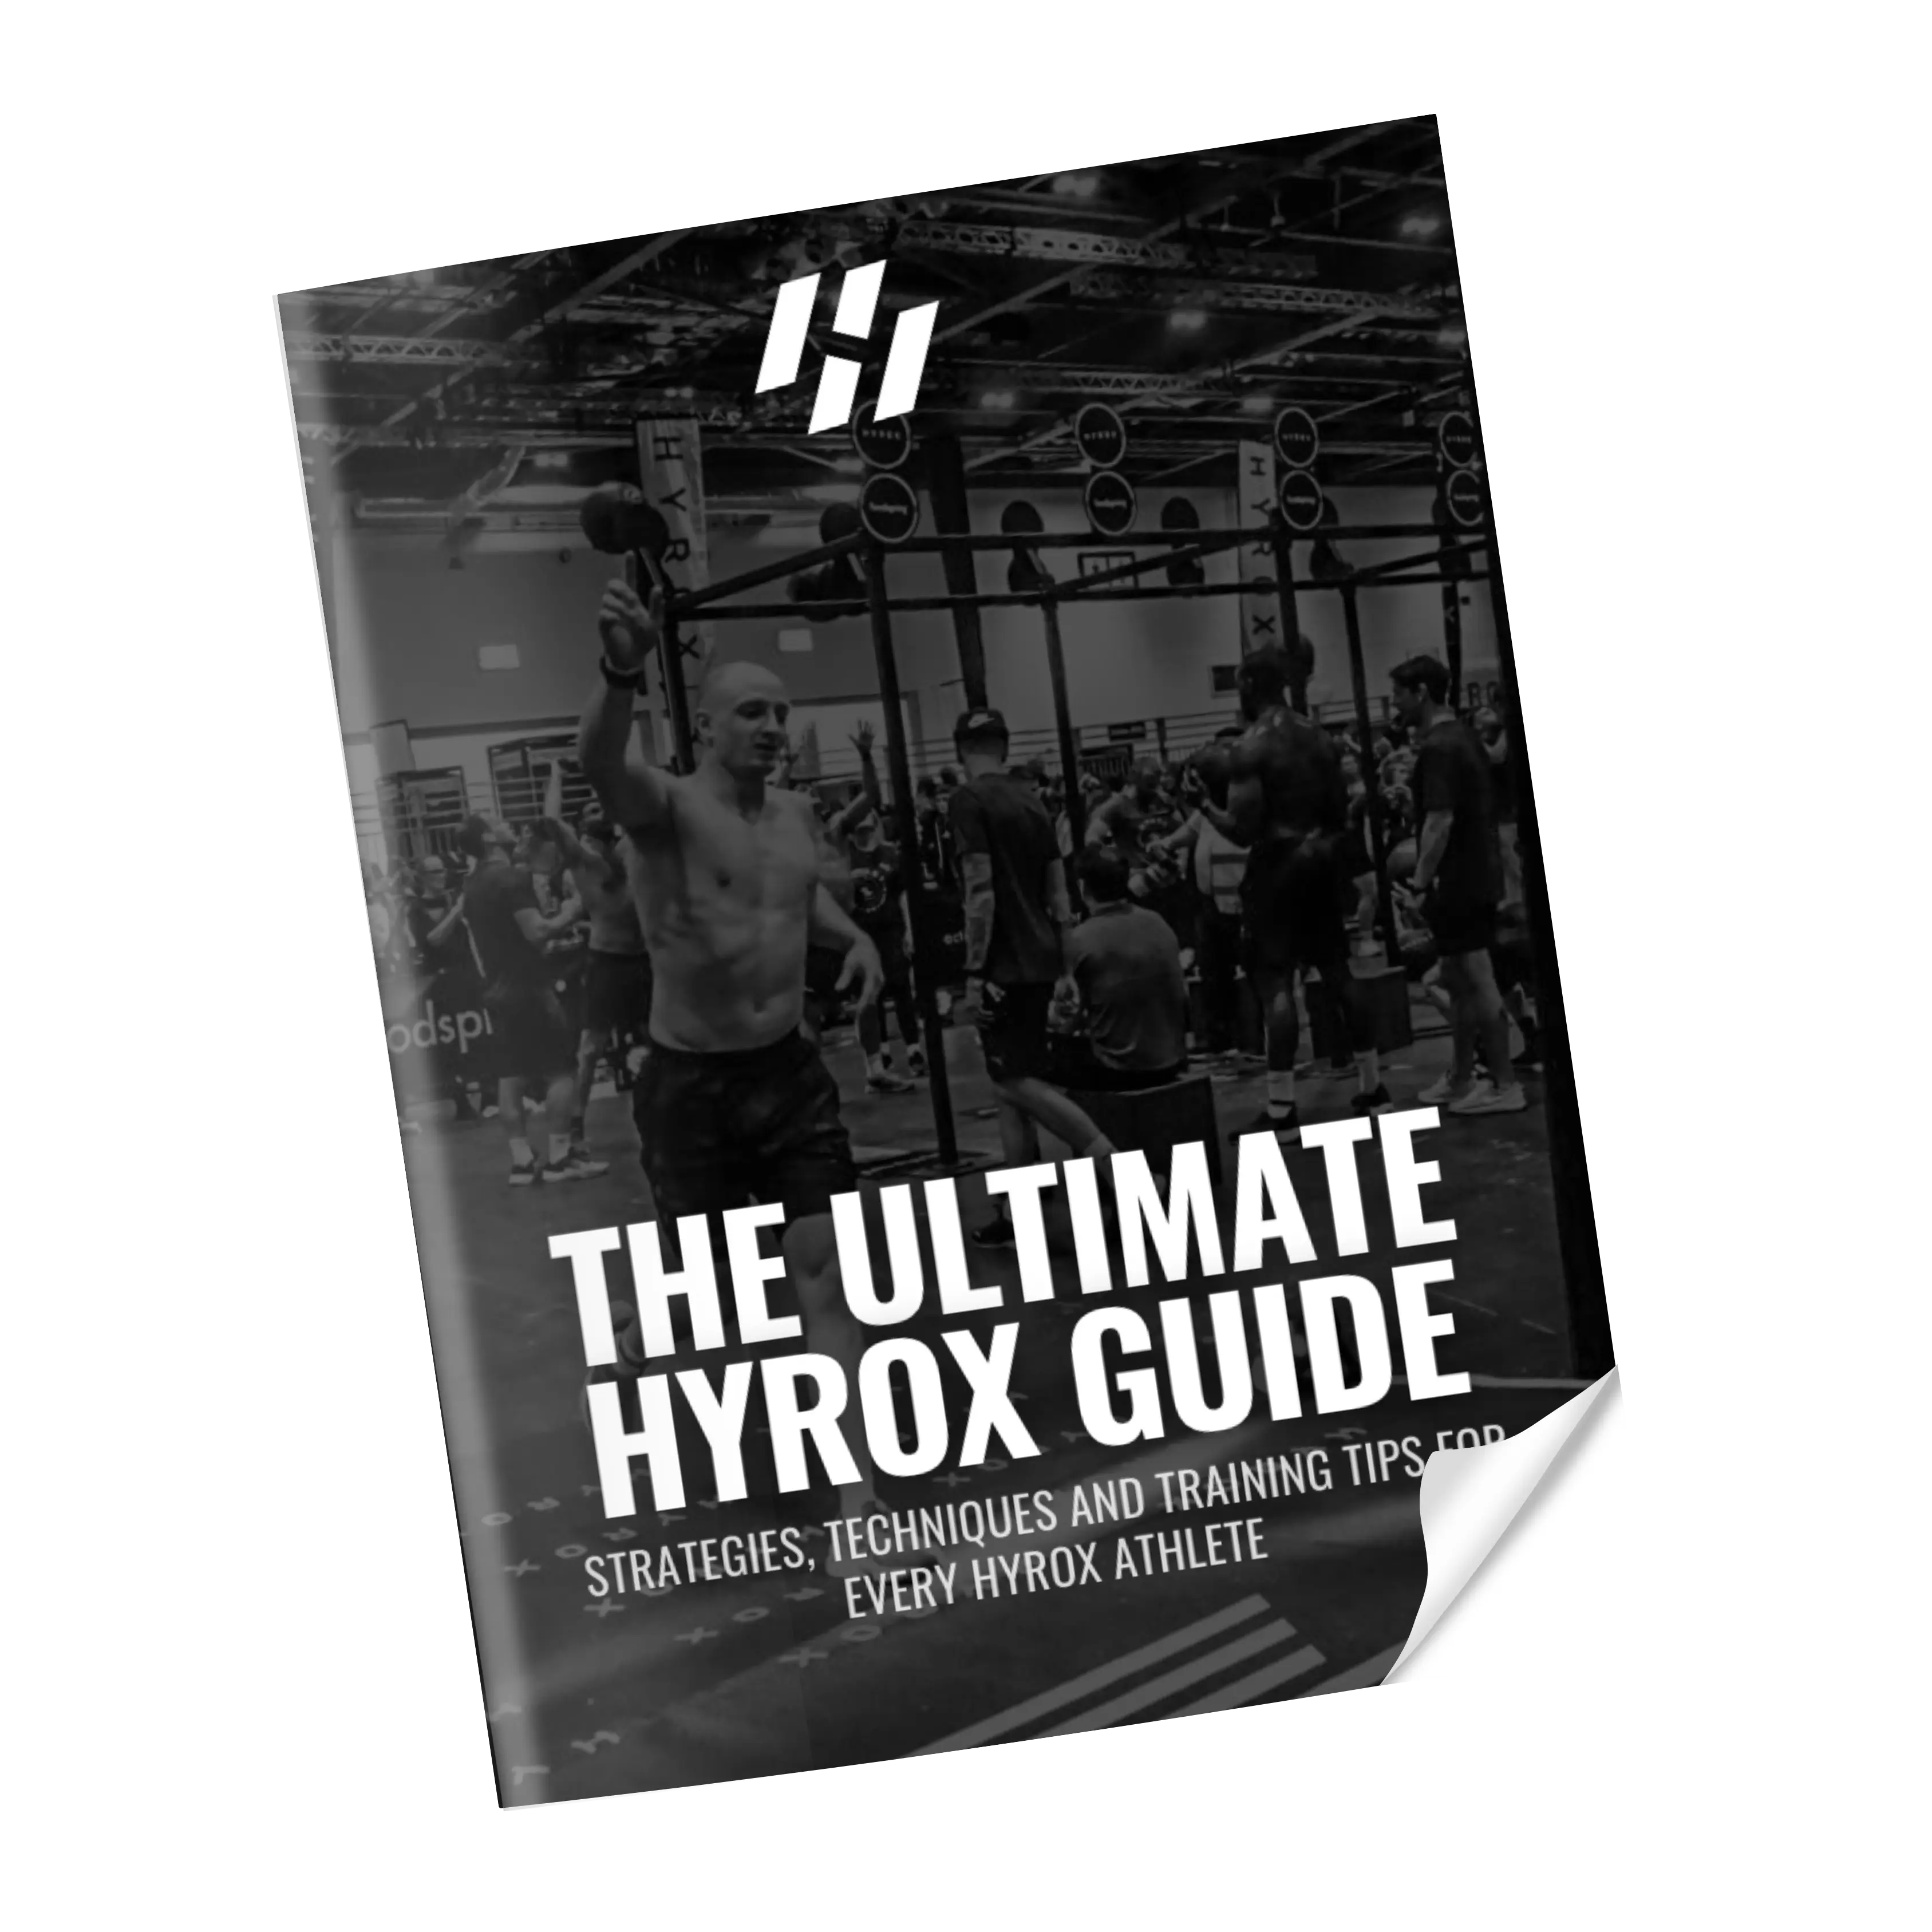 Hyrox Guide